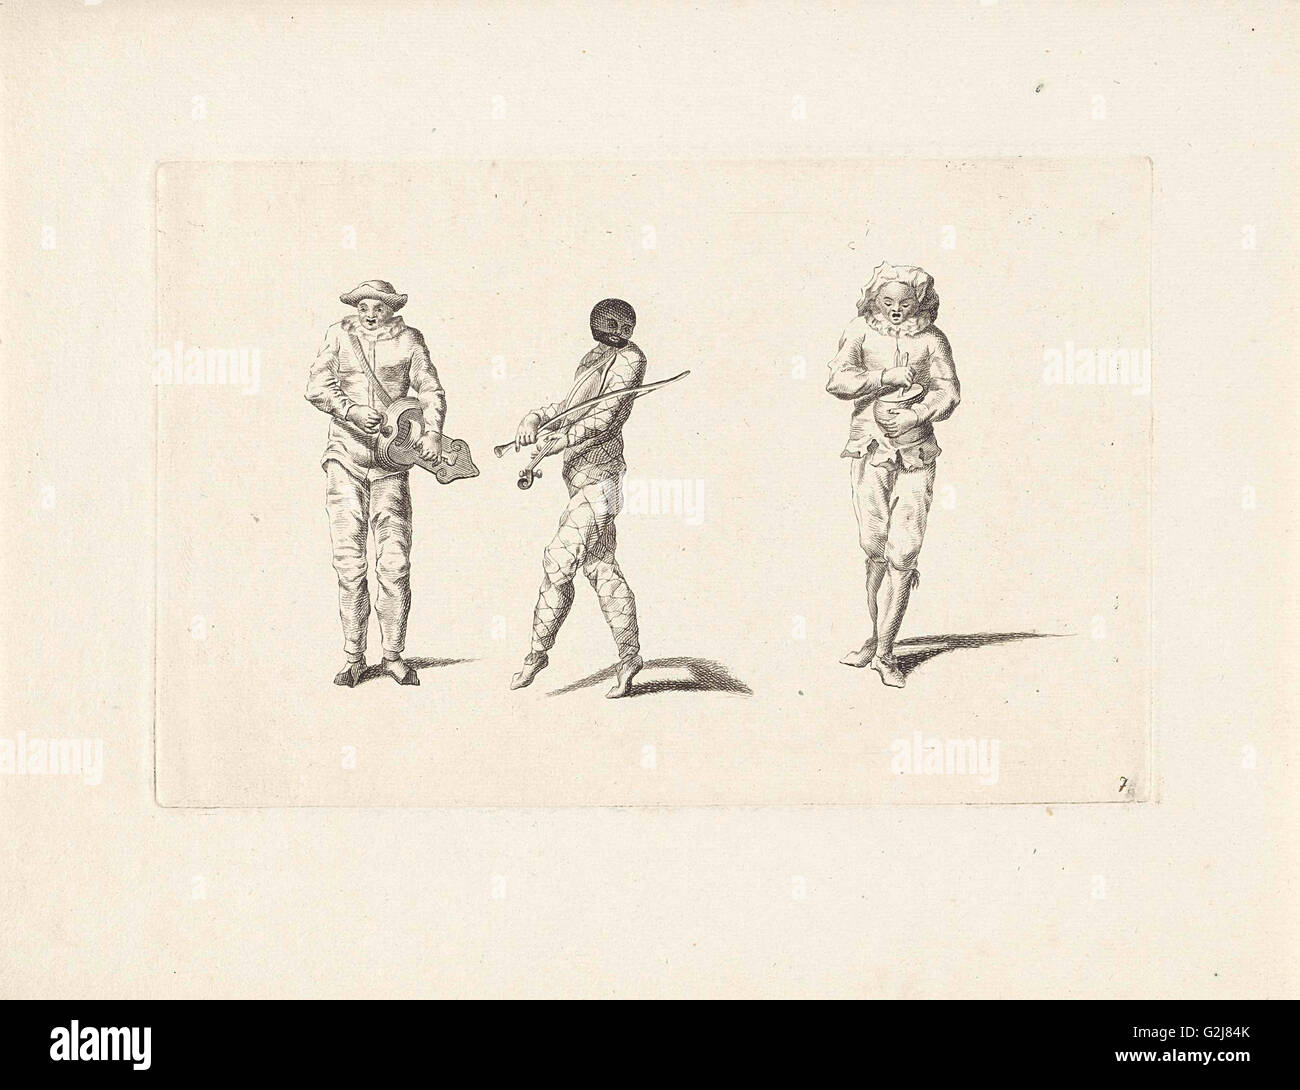 Harlequin and two jesters making music, Anonymous, Gerardus Josephus Xavery, Pieter Schenk (I), 1728 Stock Photo